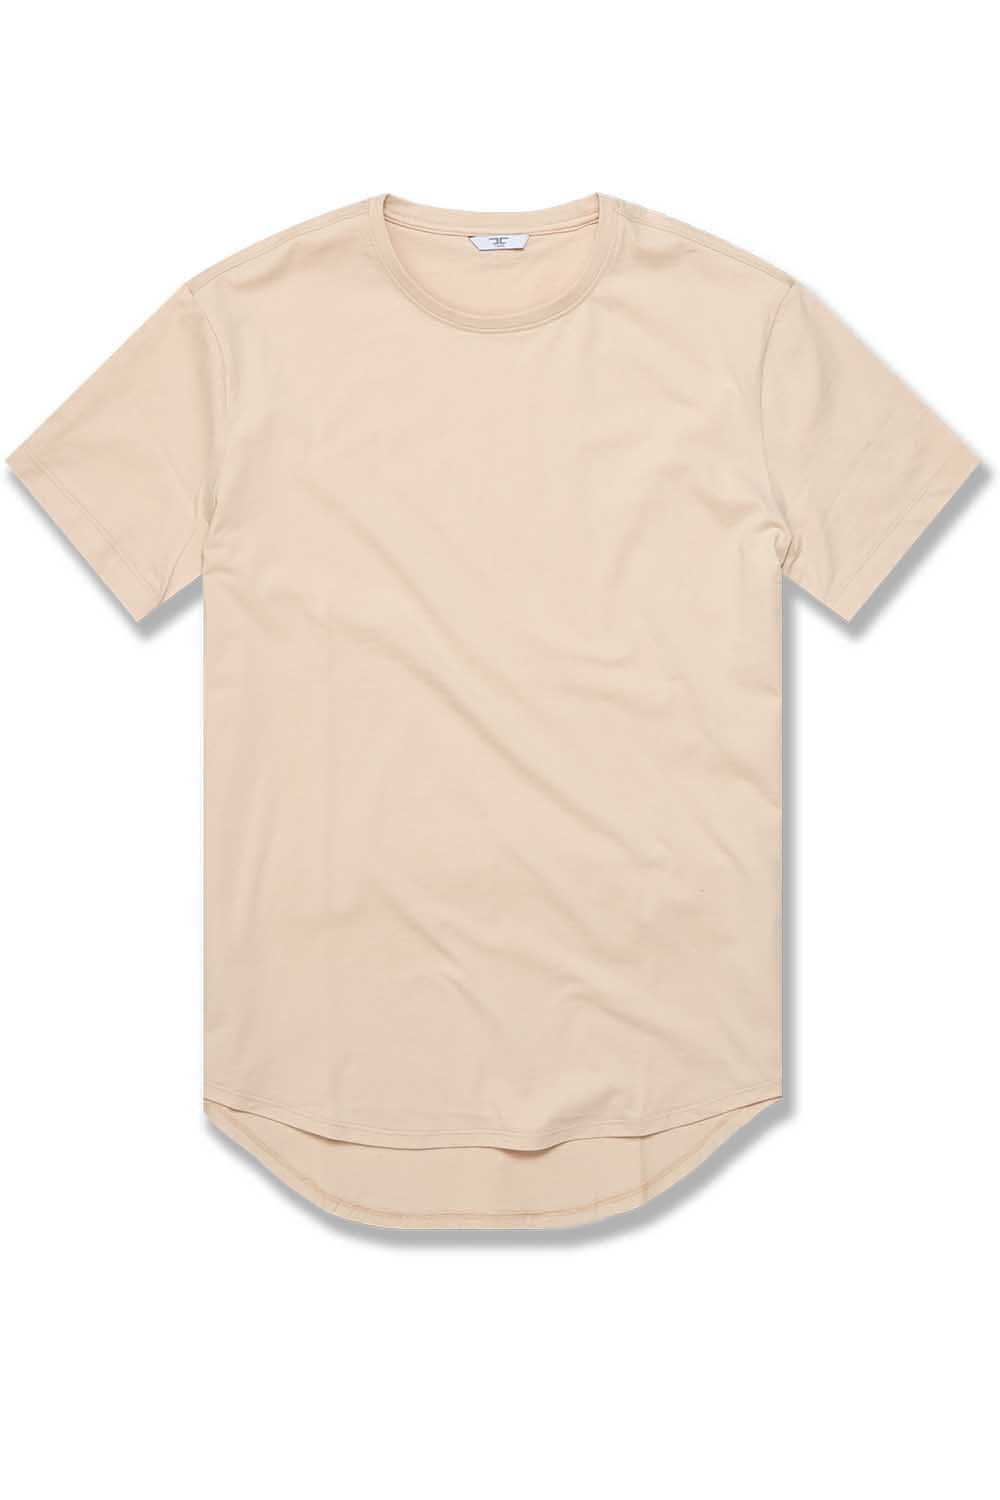 JC Big Men Big Men's Scallop T-Shirt (Name Your Price) Light Earth / 4XL